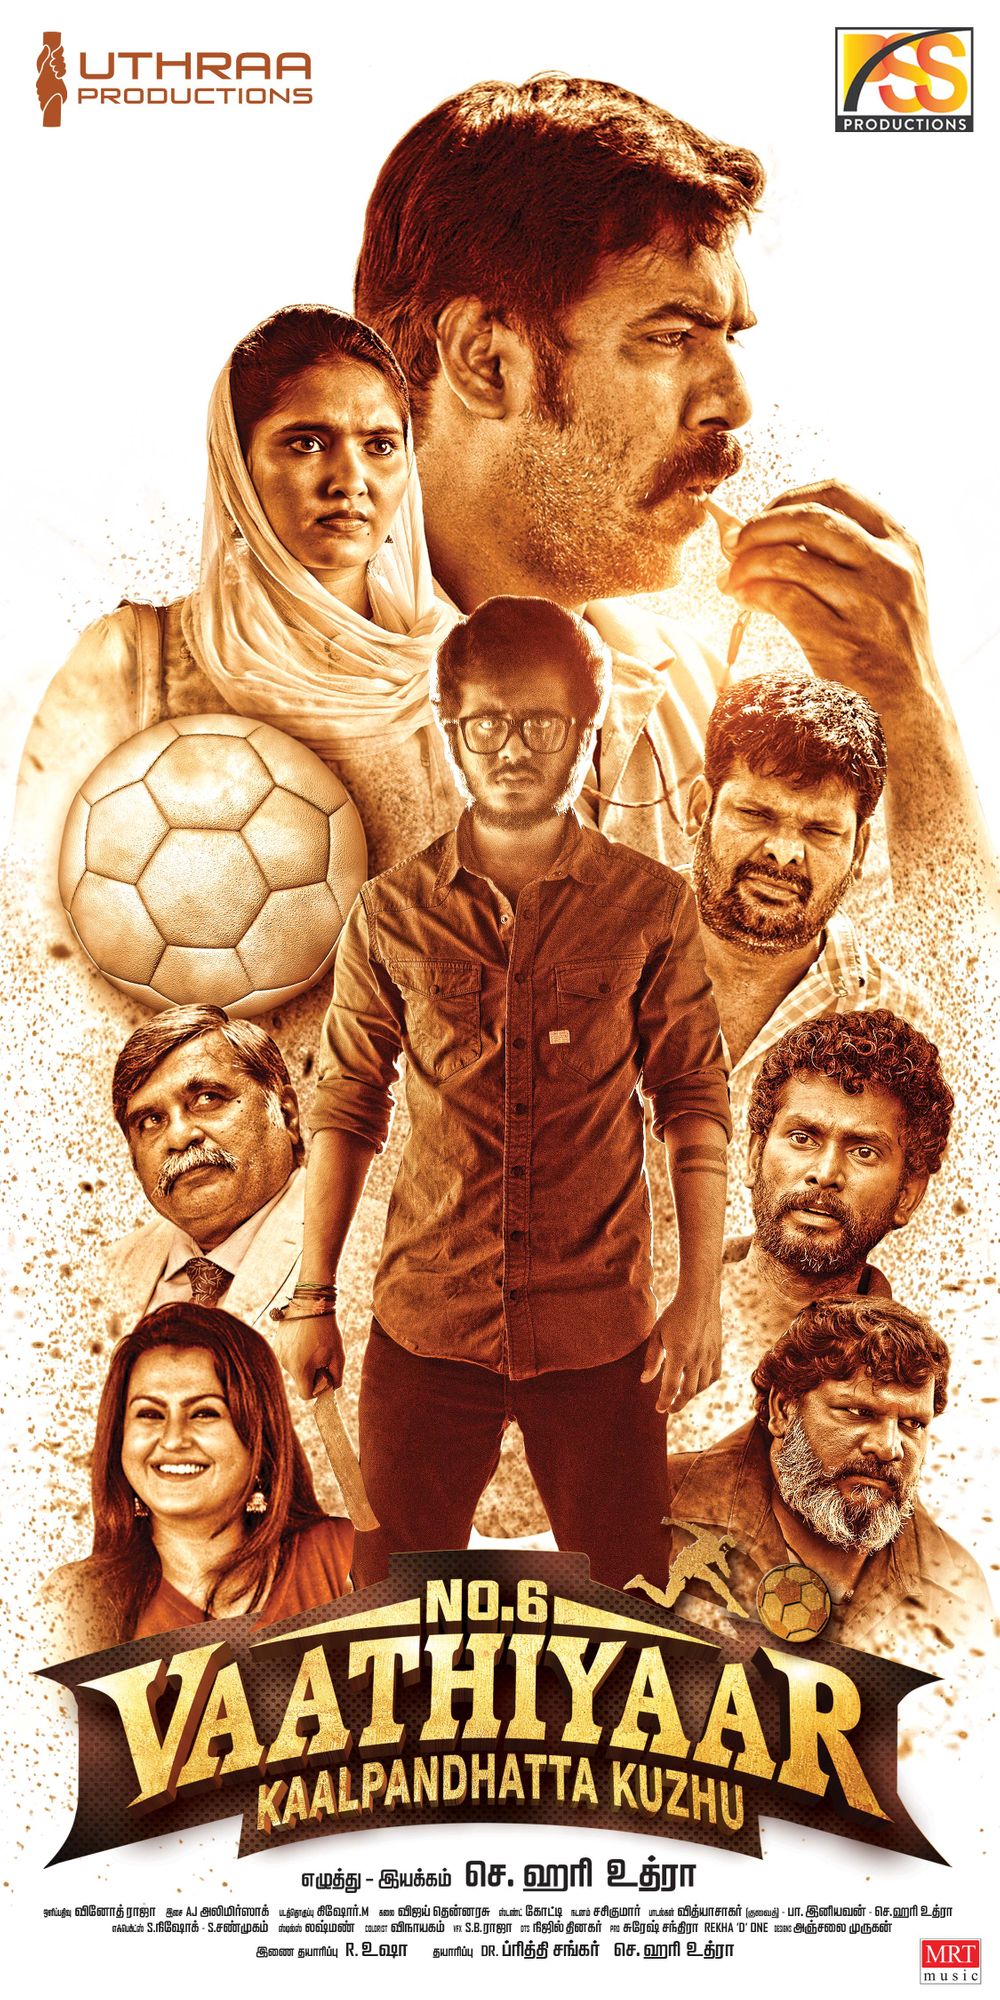 No.6 Vaathiyaar Kaalpandhatta Kuzhu Movie Review